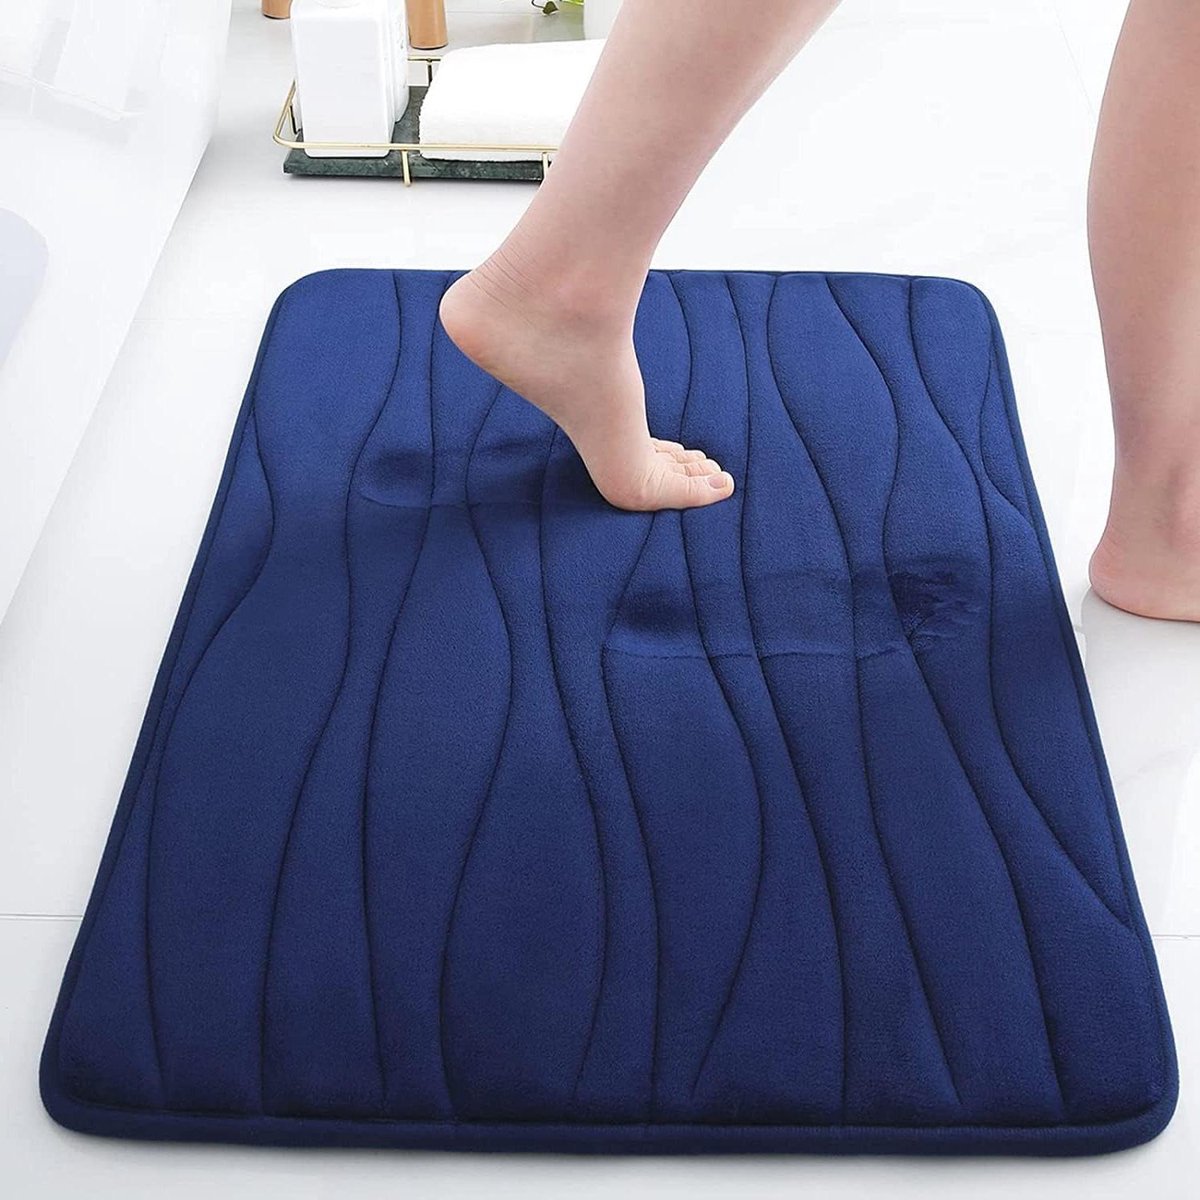 Traagschuim badkamertapijt zacht badmat antislip absorberend wasbaar marineblauw 50 x 76 cm - Homaxy Badmat